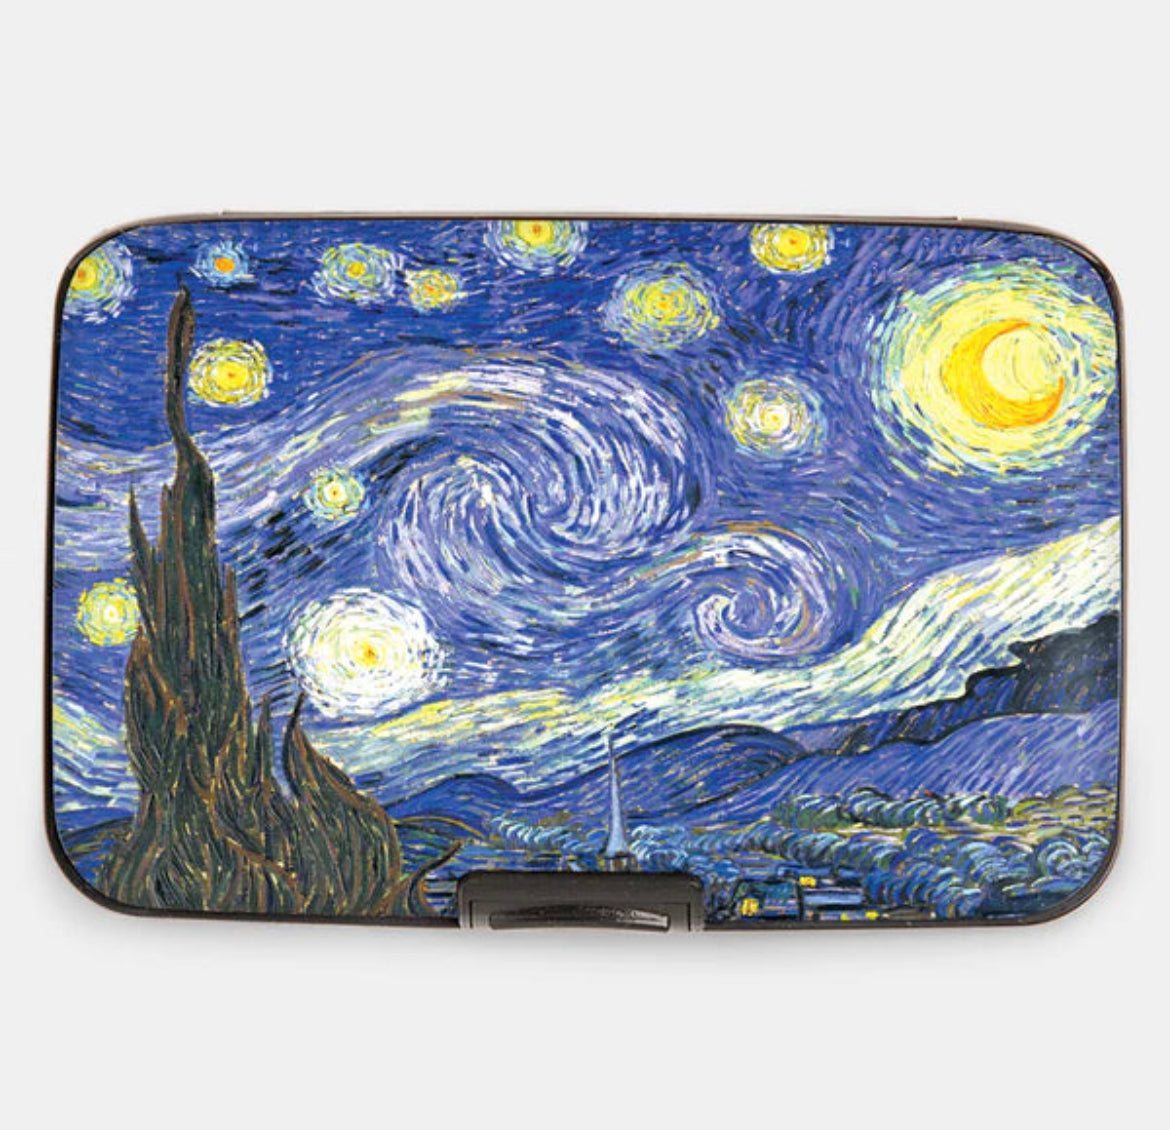 Monarque RFID Blocking Armored Wallet- Van Gogh’s Starry Night